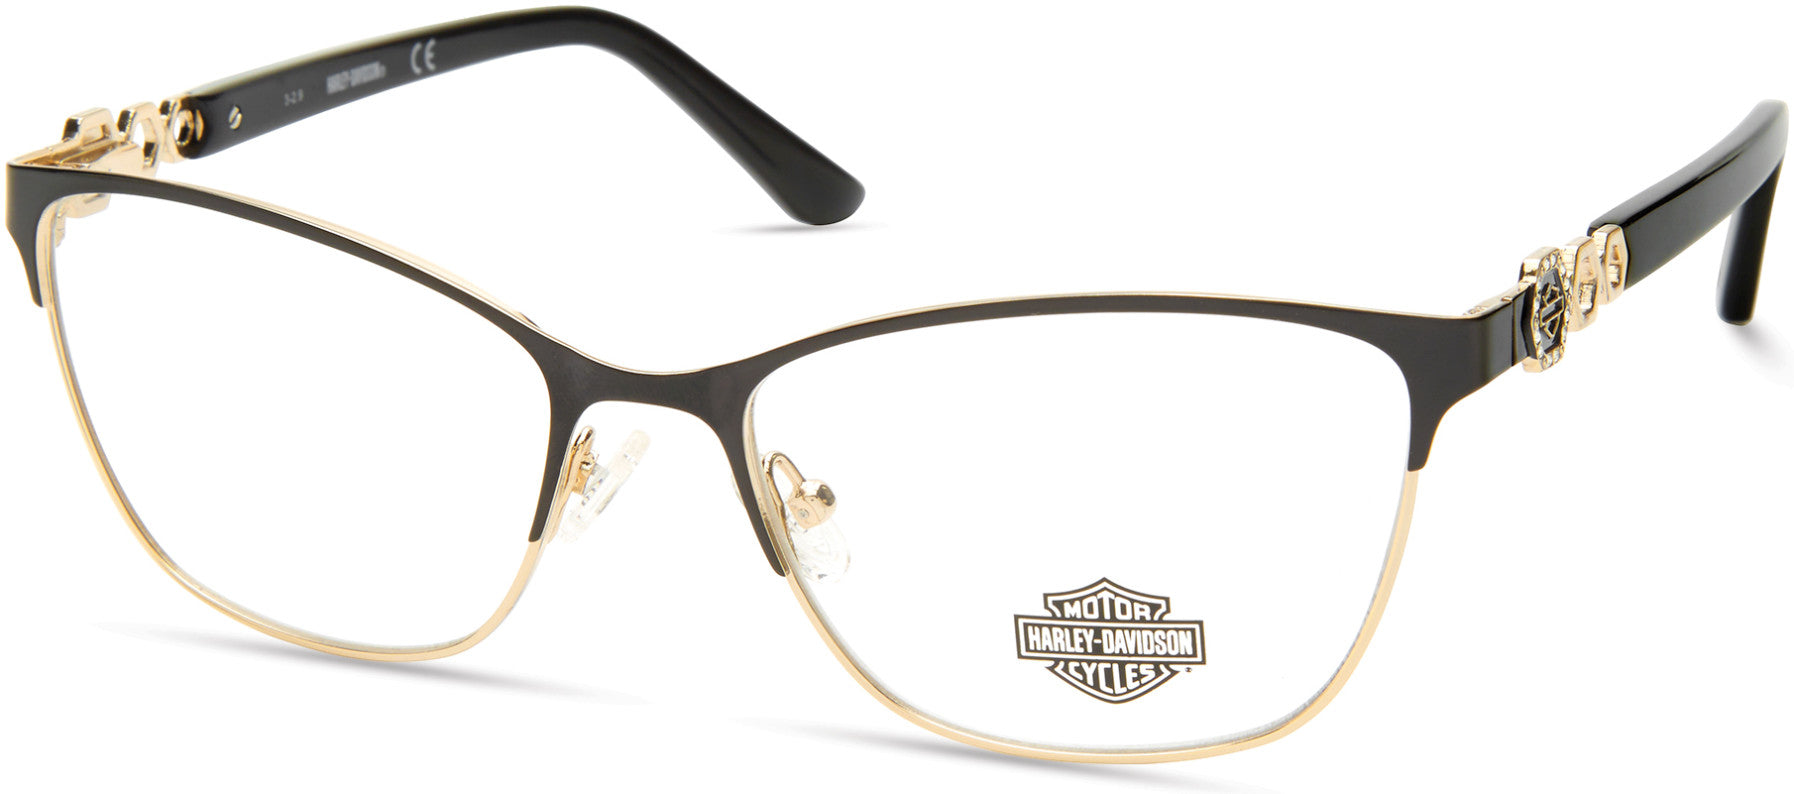 Harley-Davidson HD0553 Rectangular Eyeglasses 001-001 - Shiny Black